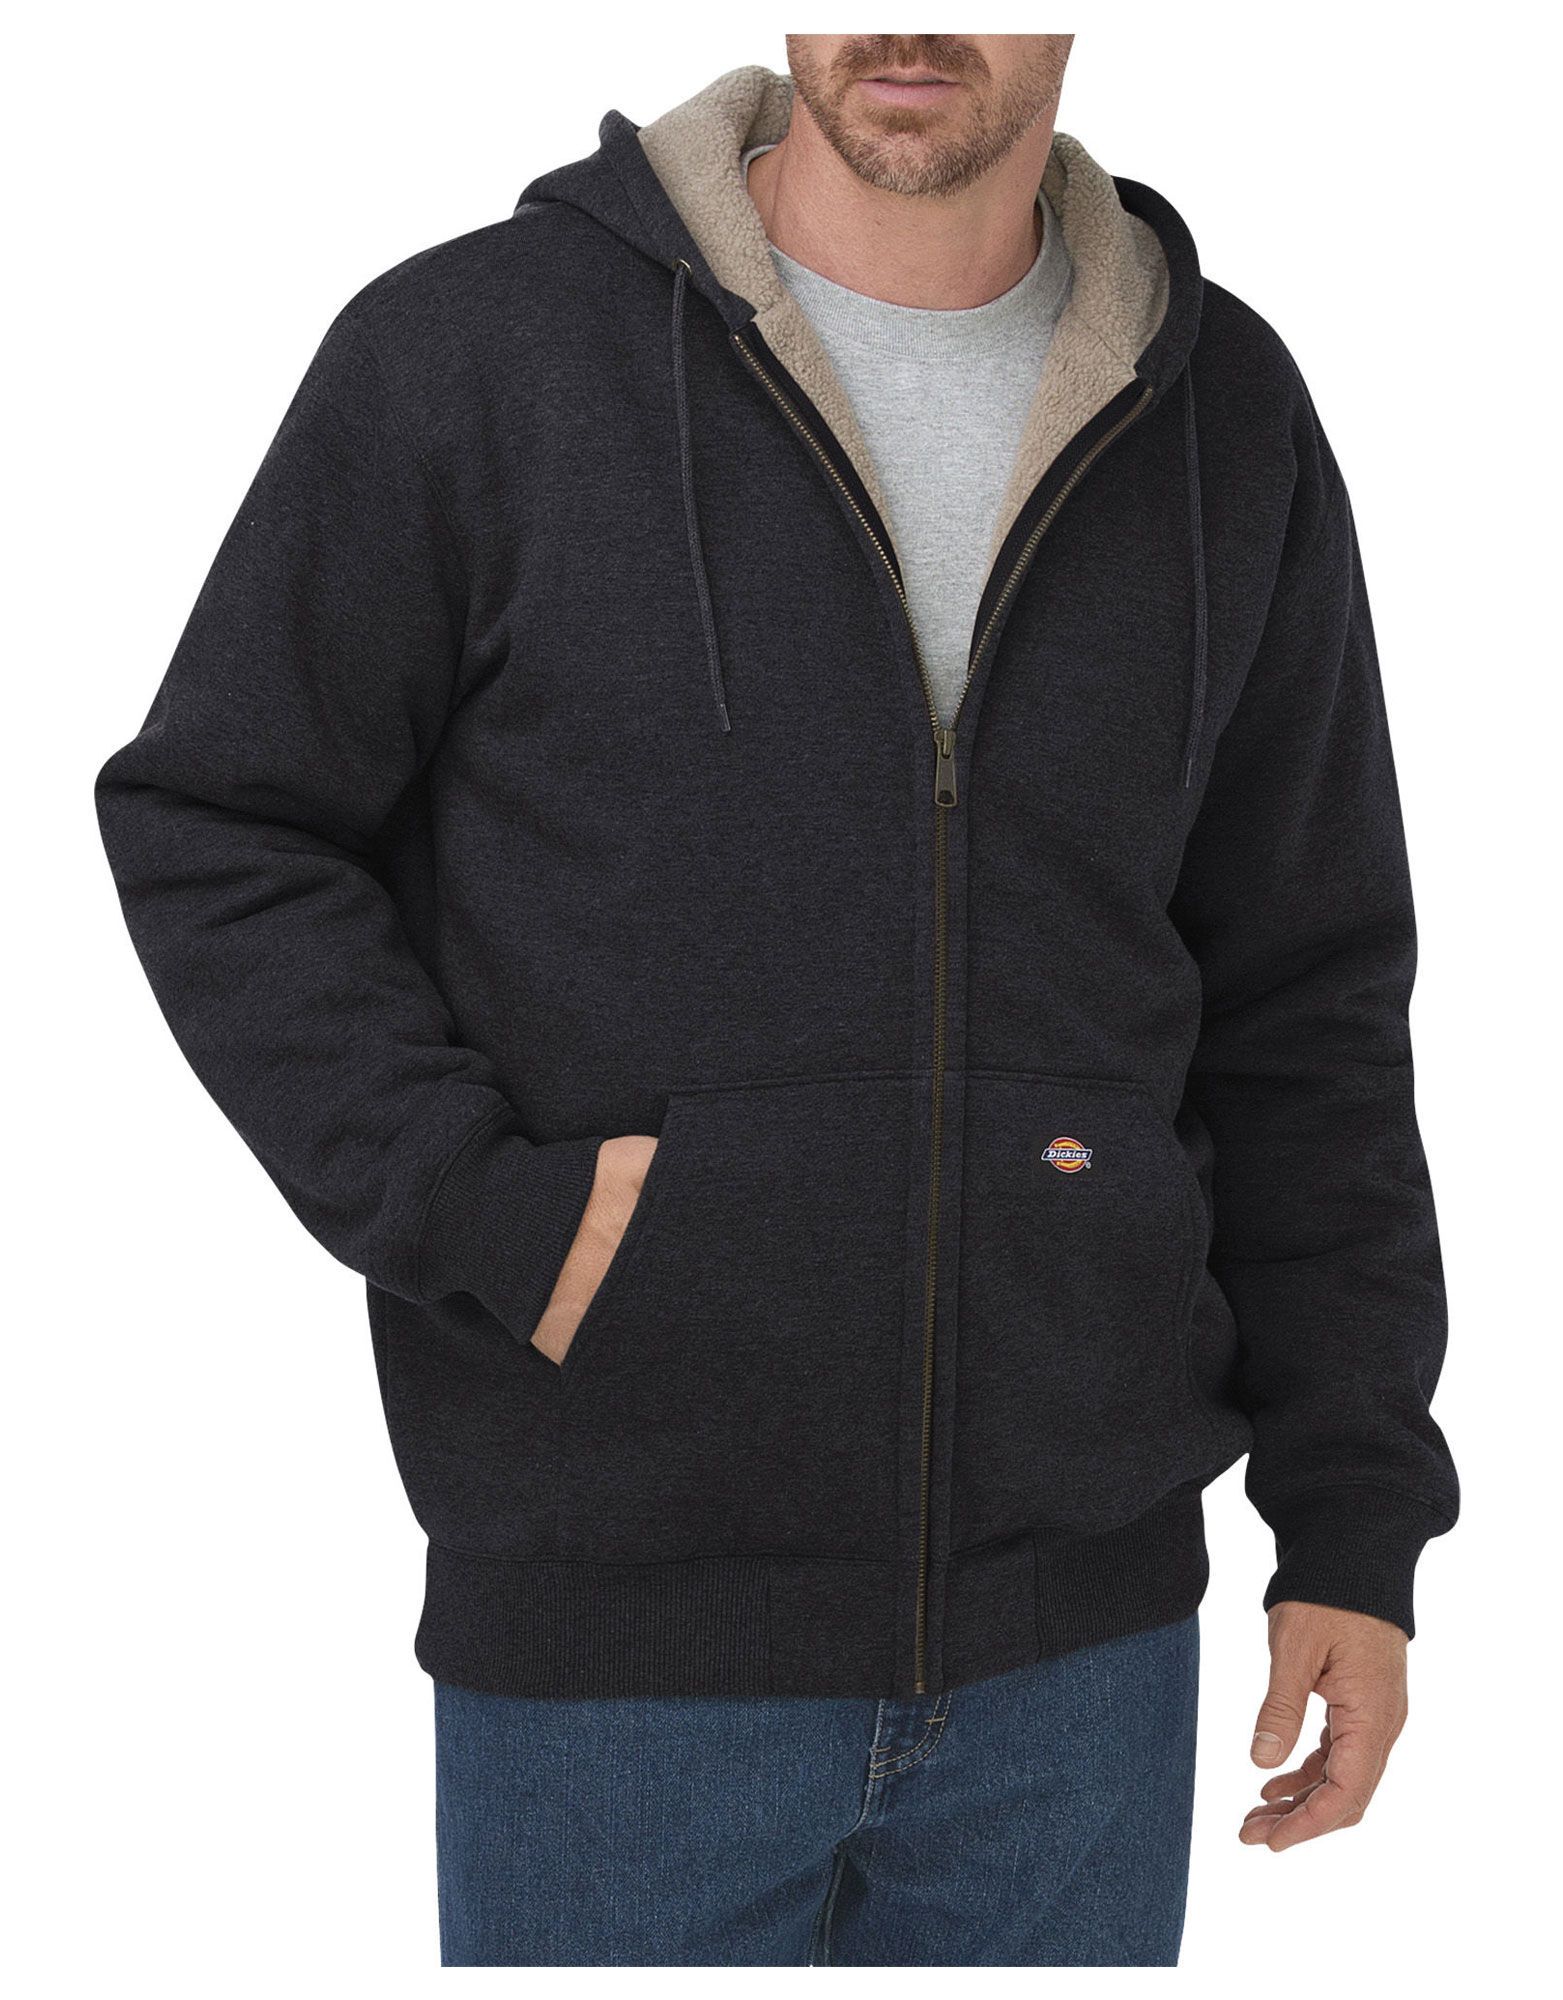 sherpa jacket with hoodie